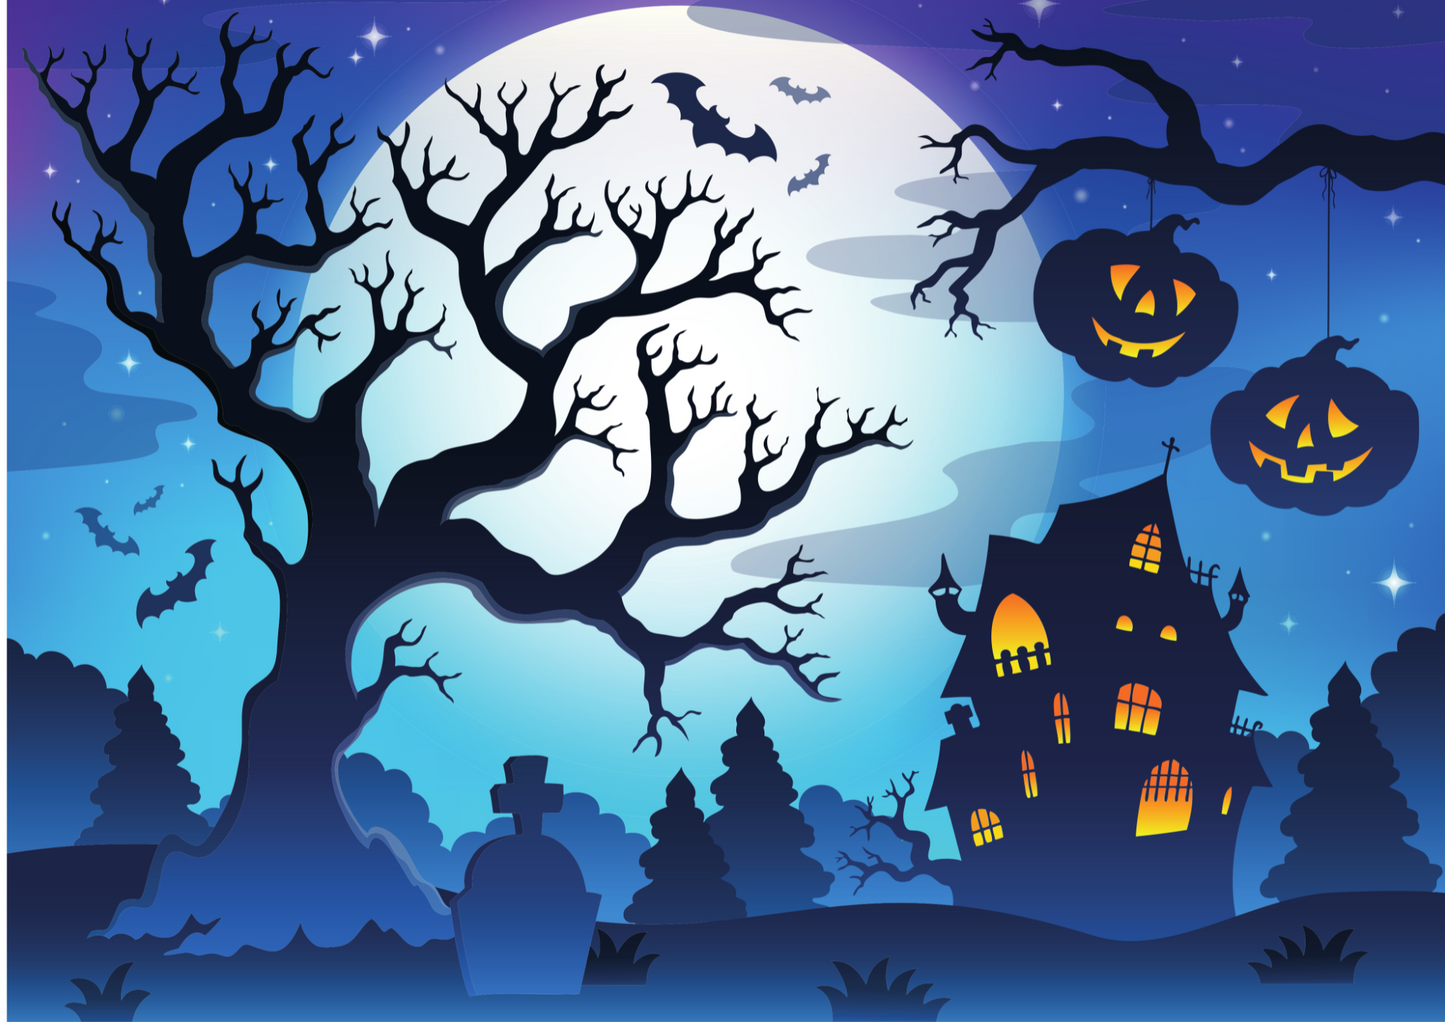 Blue image - moon in background, creepy tree, creepy  house, jack-o-lanterns hanging from tree